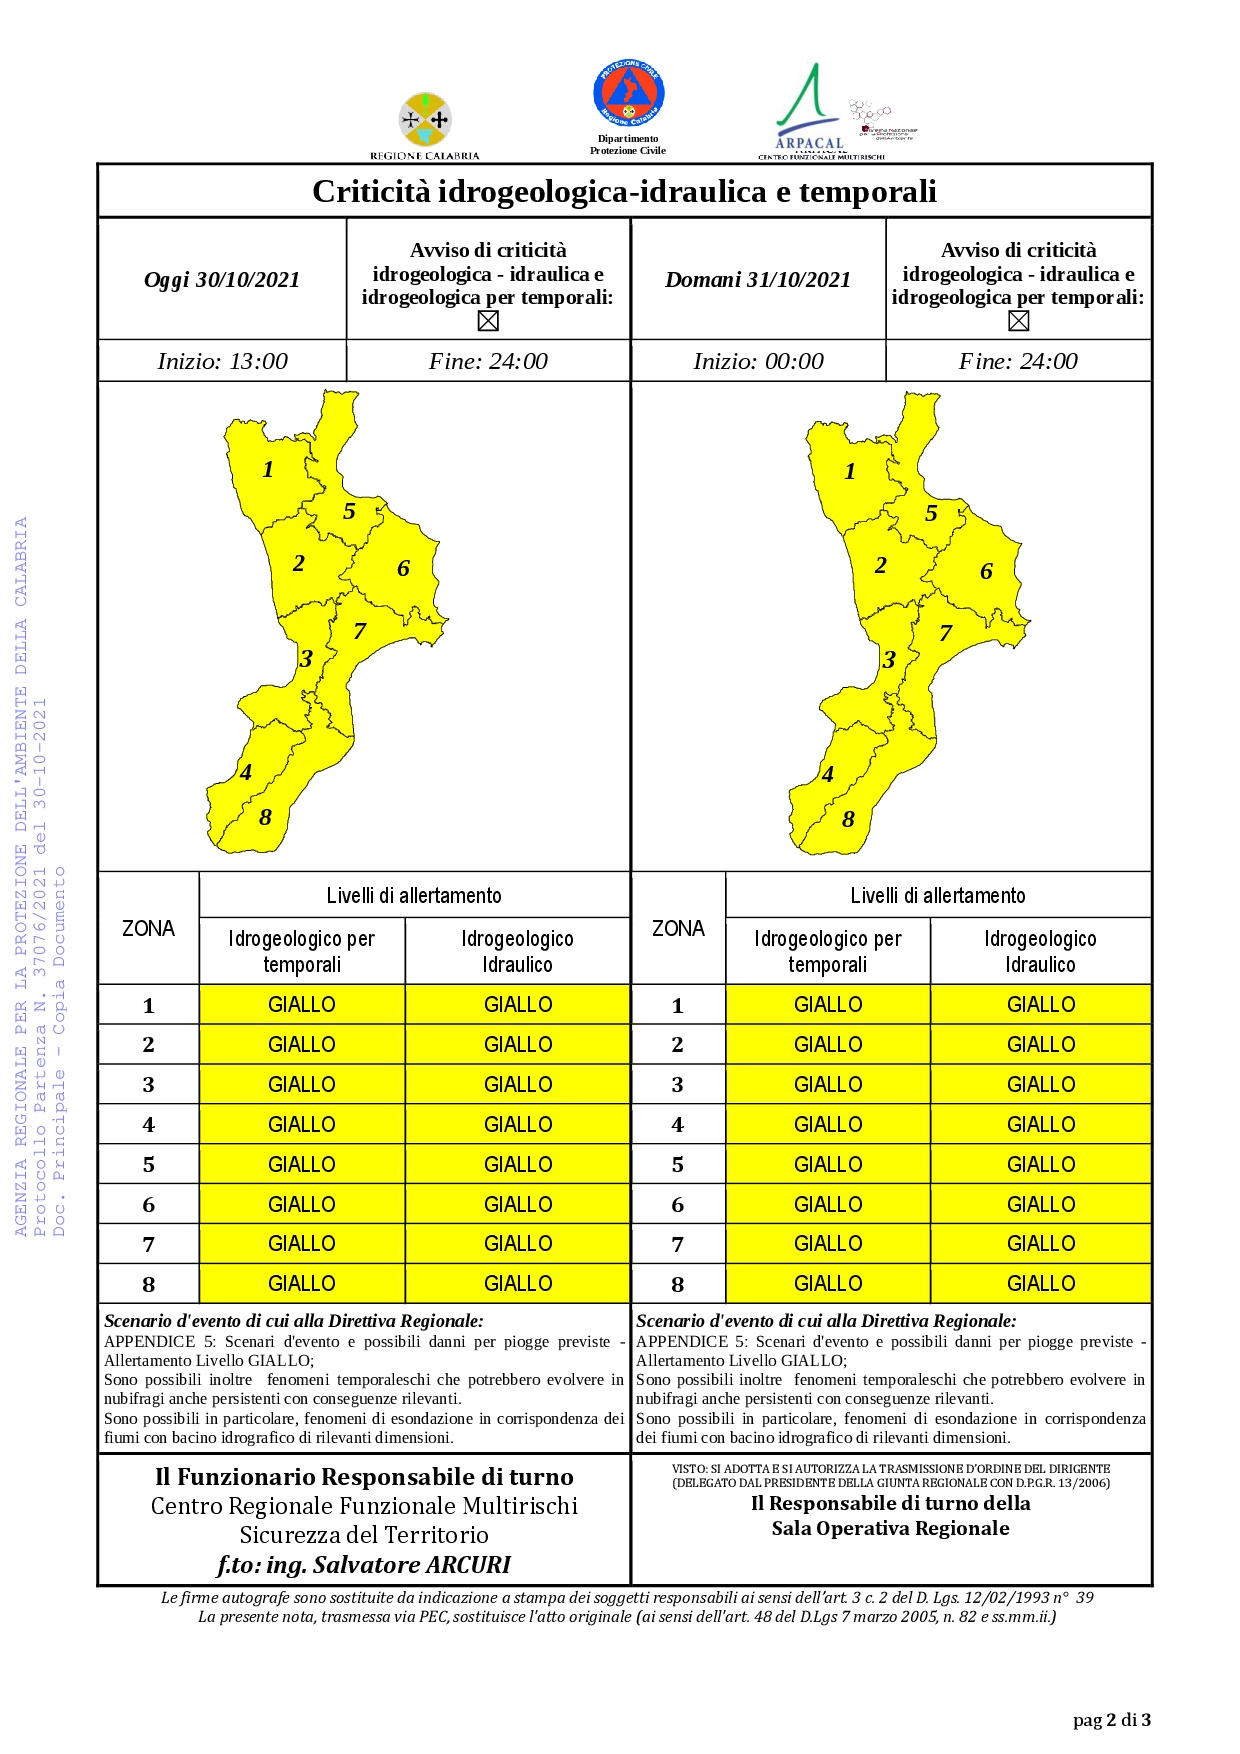 Criticità idrogeologica-idraulica e temporali in Calabria 30-10-2021